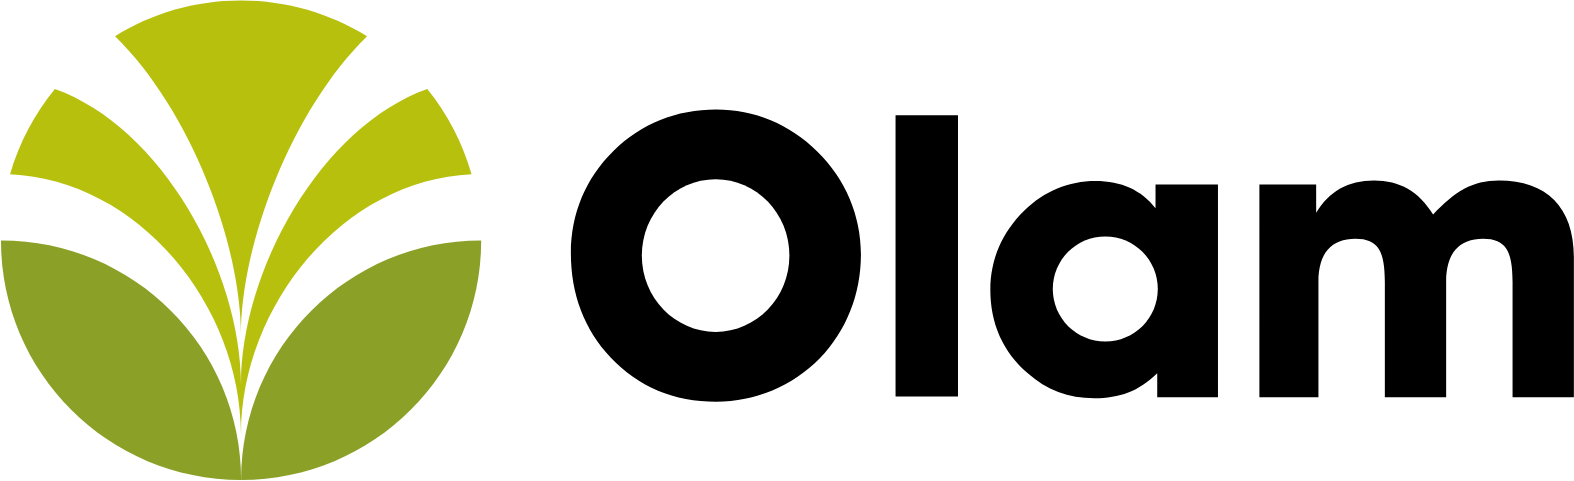 Olam logo large (transparent PNG)